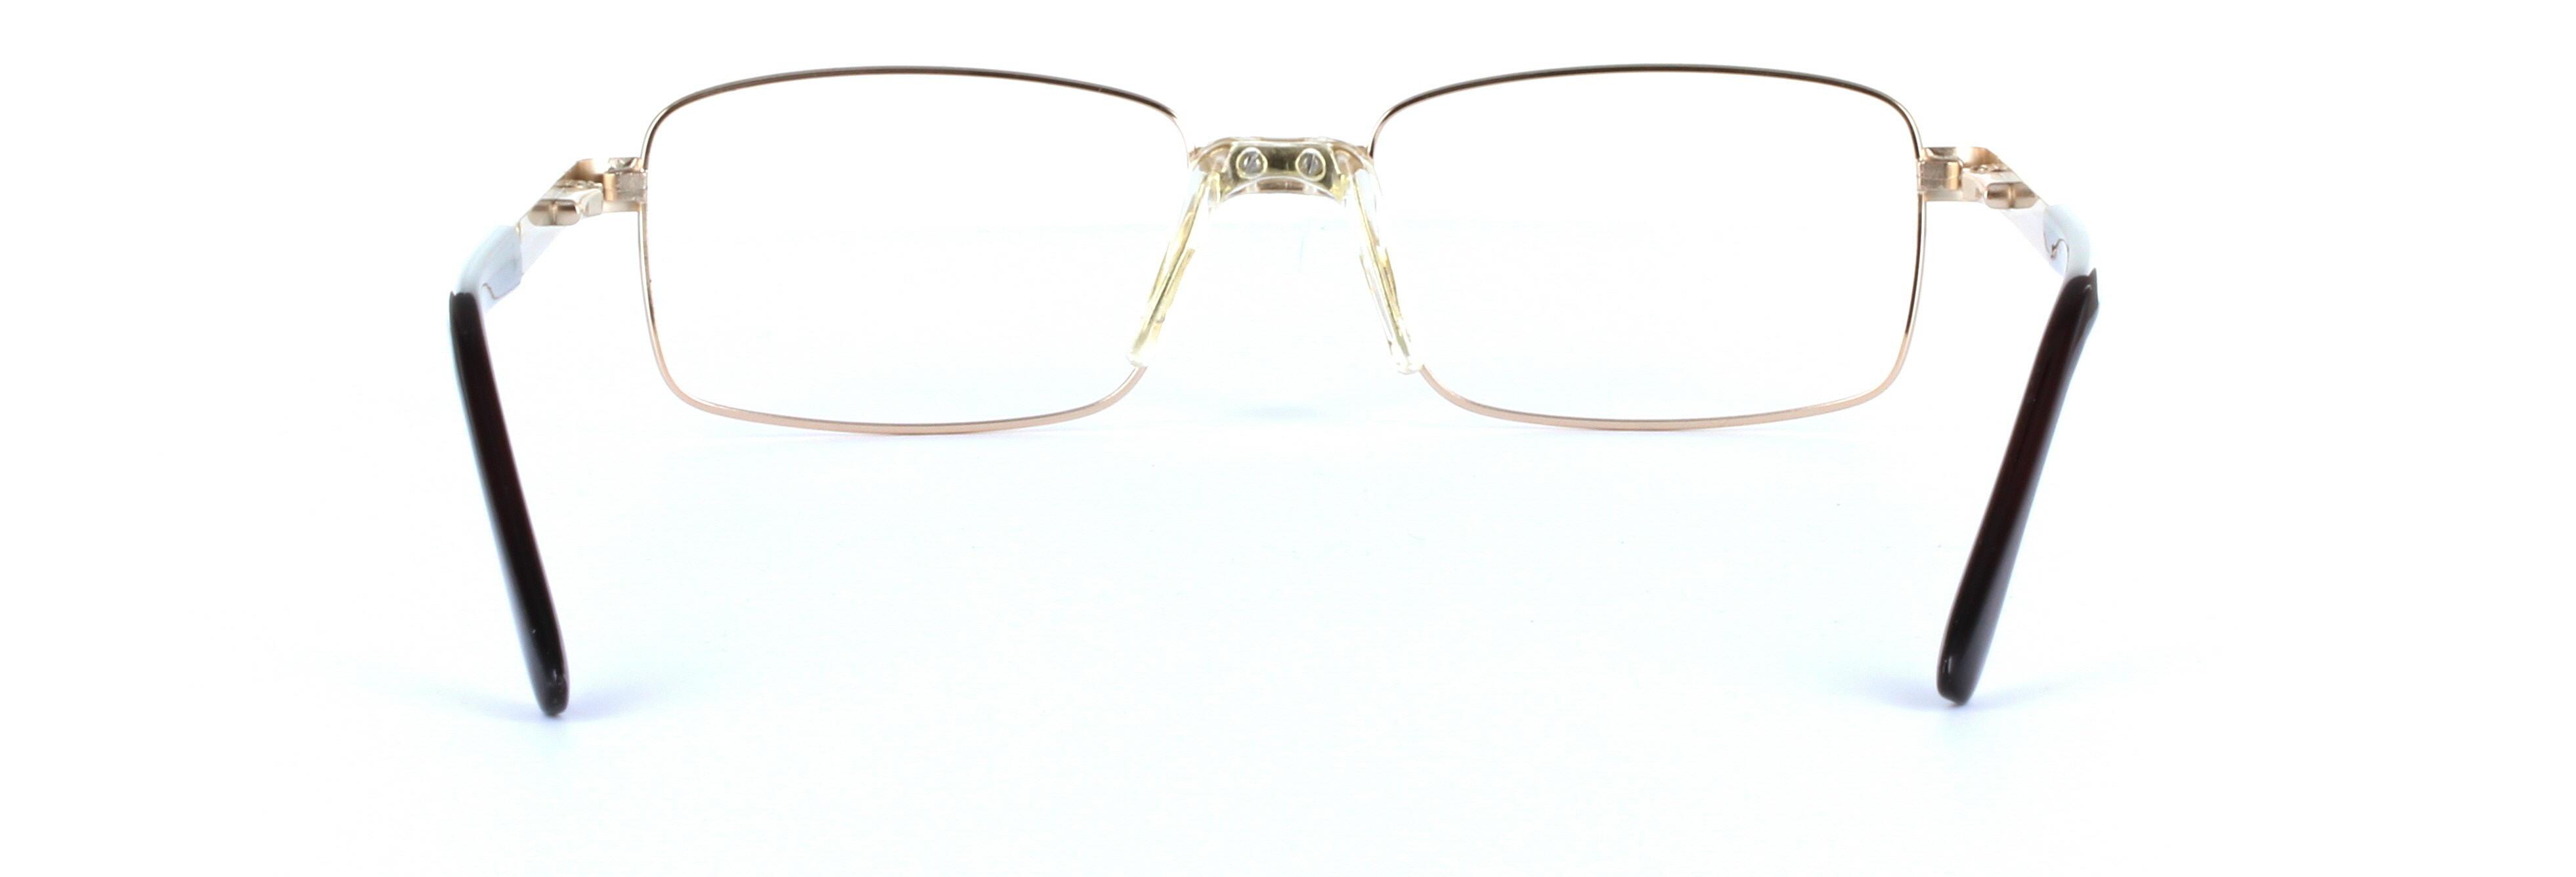 Jackson Gold Full Rim Rectangular Metal Glasses - Image View 3